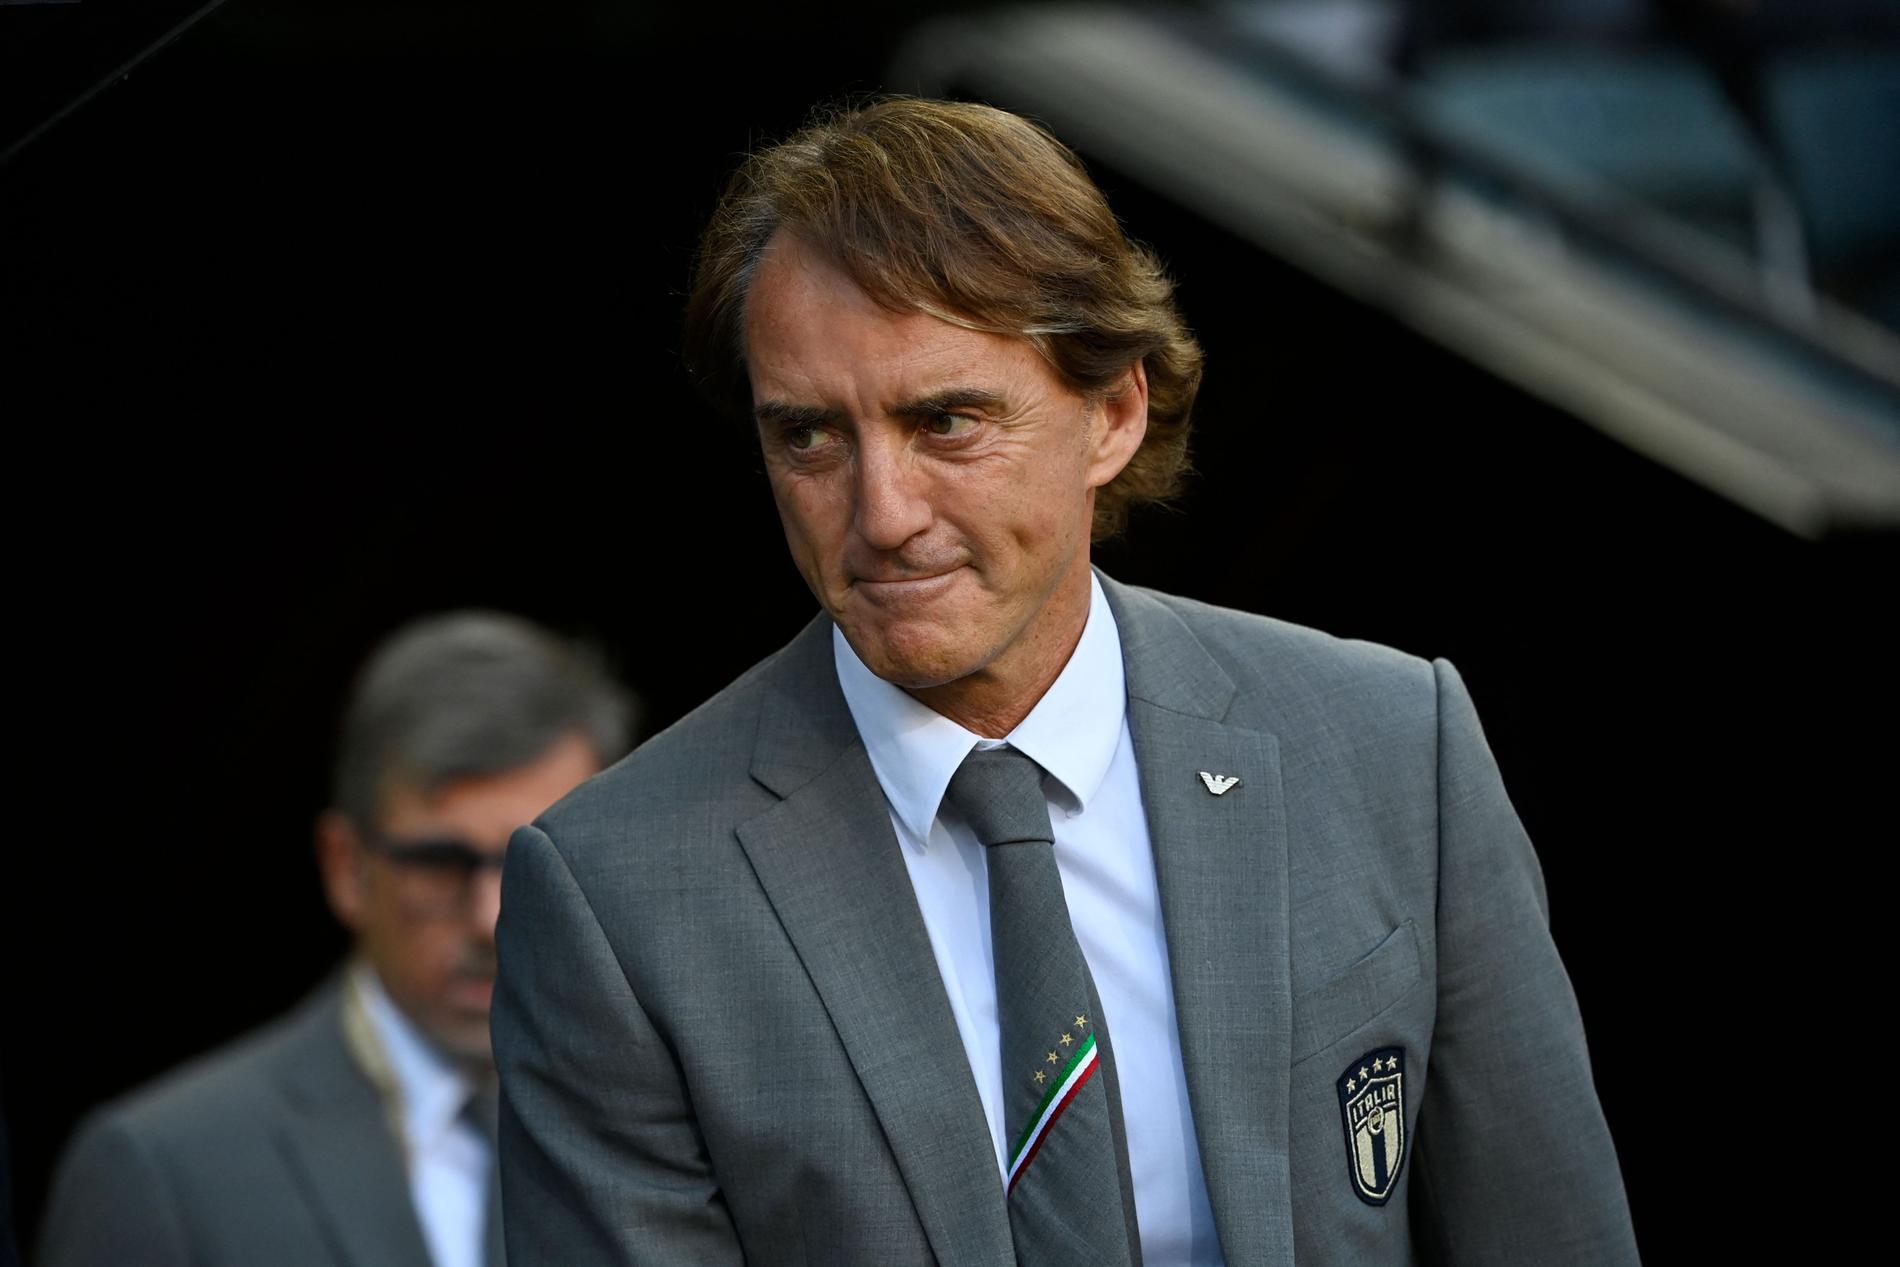 Roberto Mancini coaches the Saudi national team